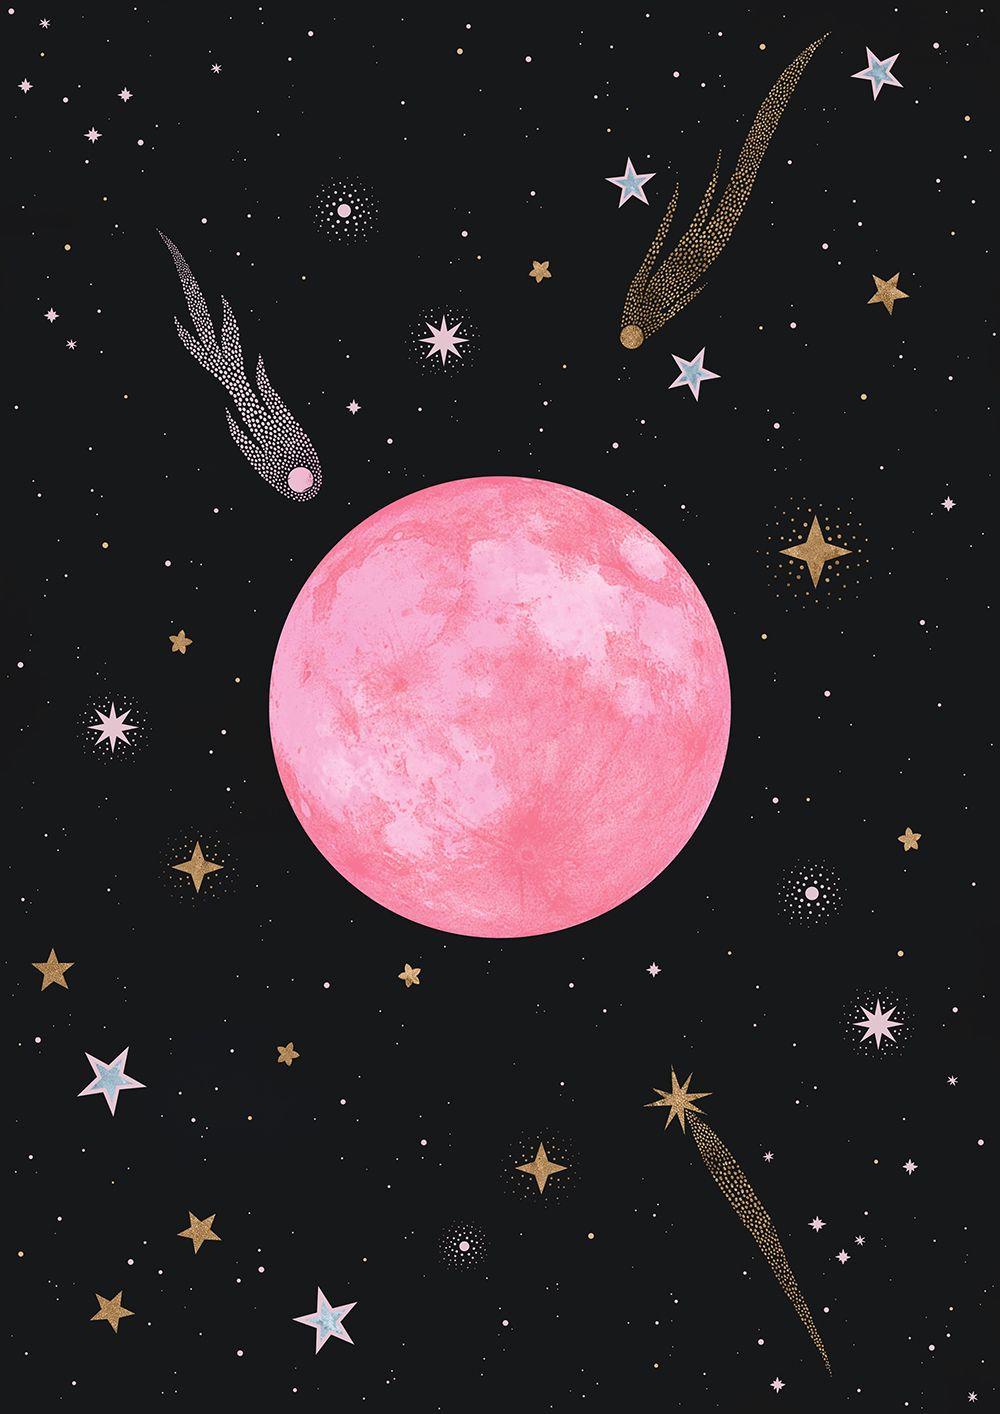 Carly Watts Illustration: Strawberry Moon #space #moon #illustration